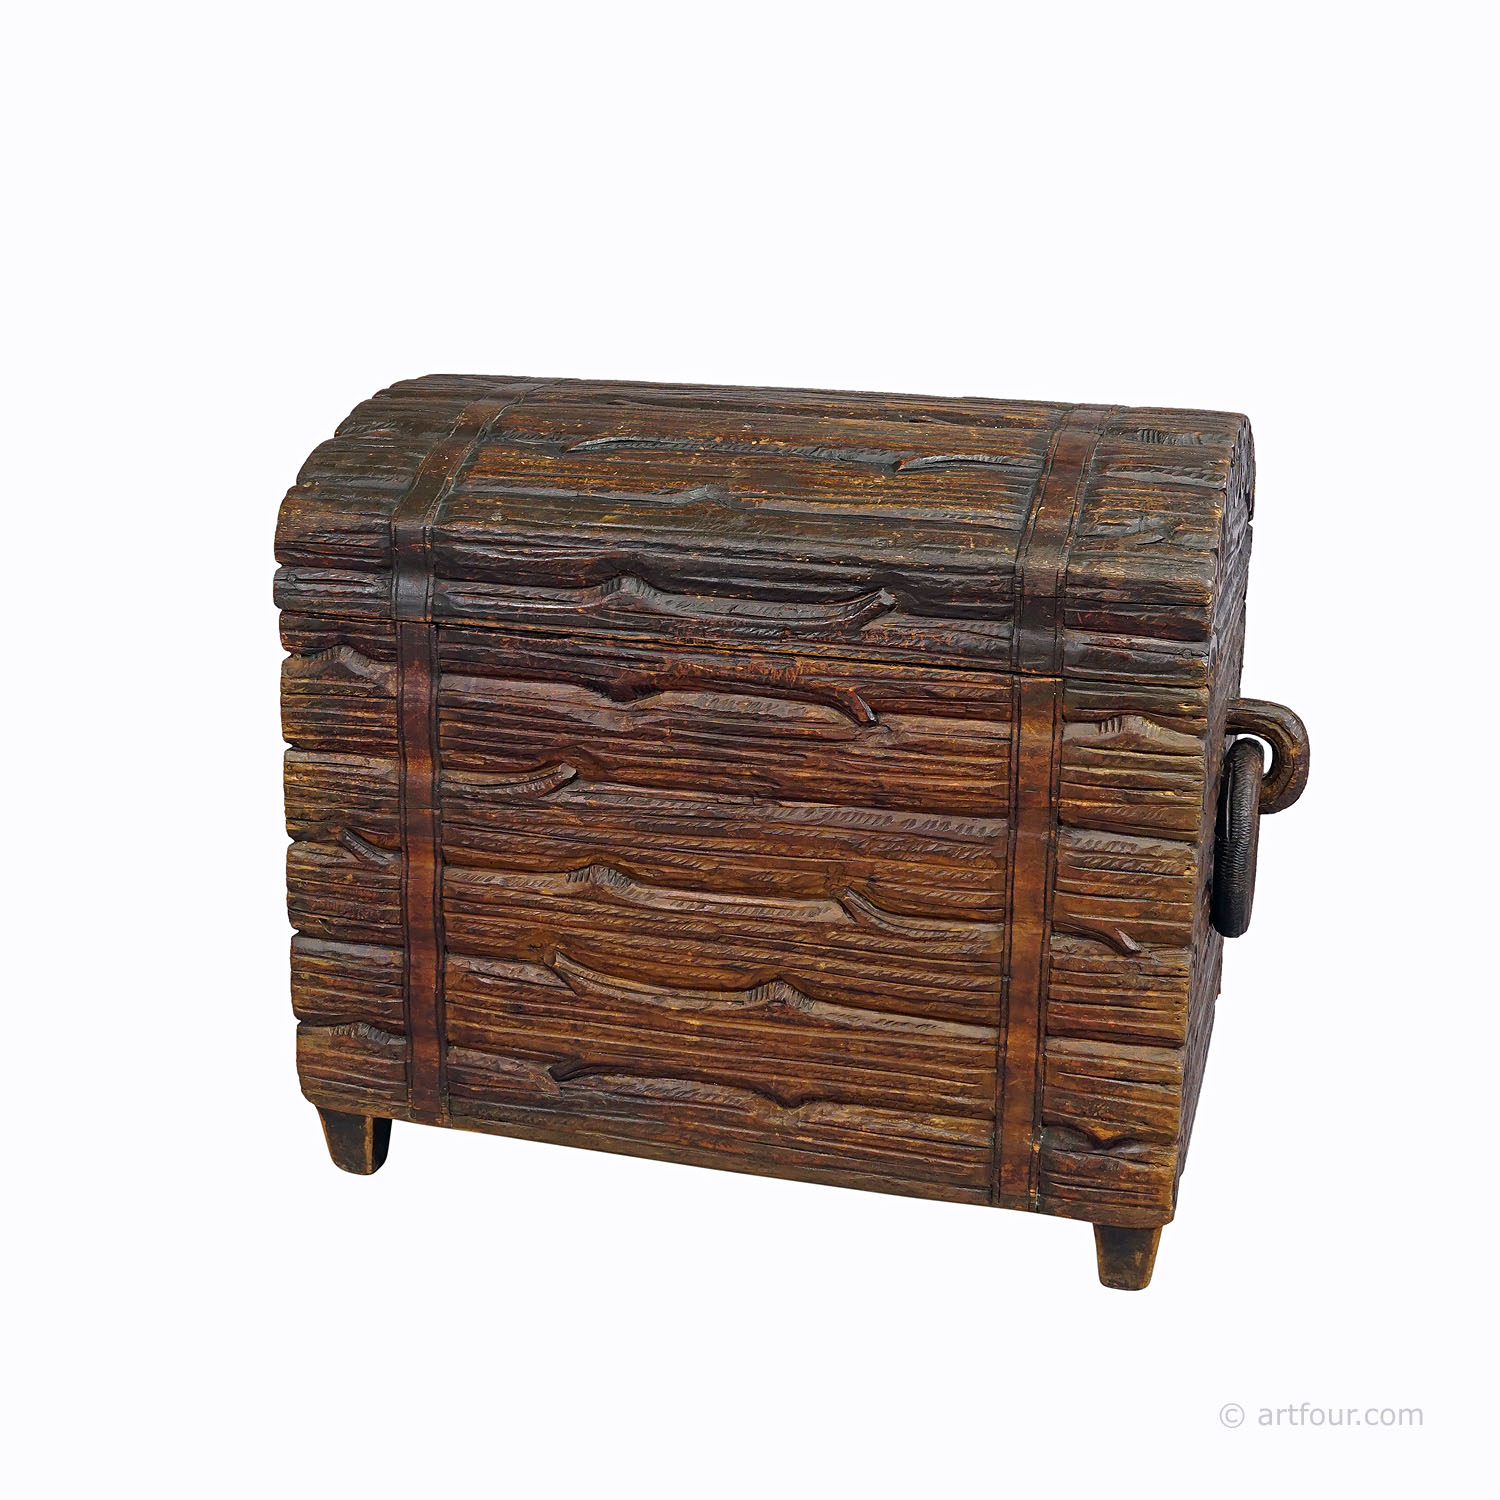 Wooden Carved Black Forest Log Box Modelled as Piled Stack of Logs